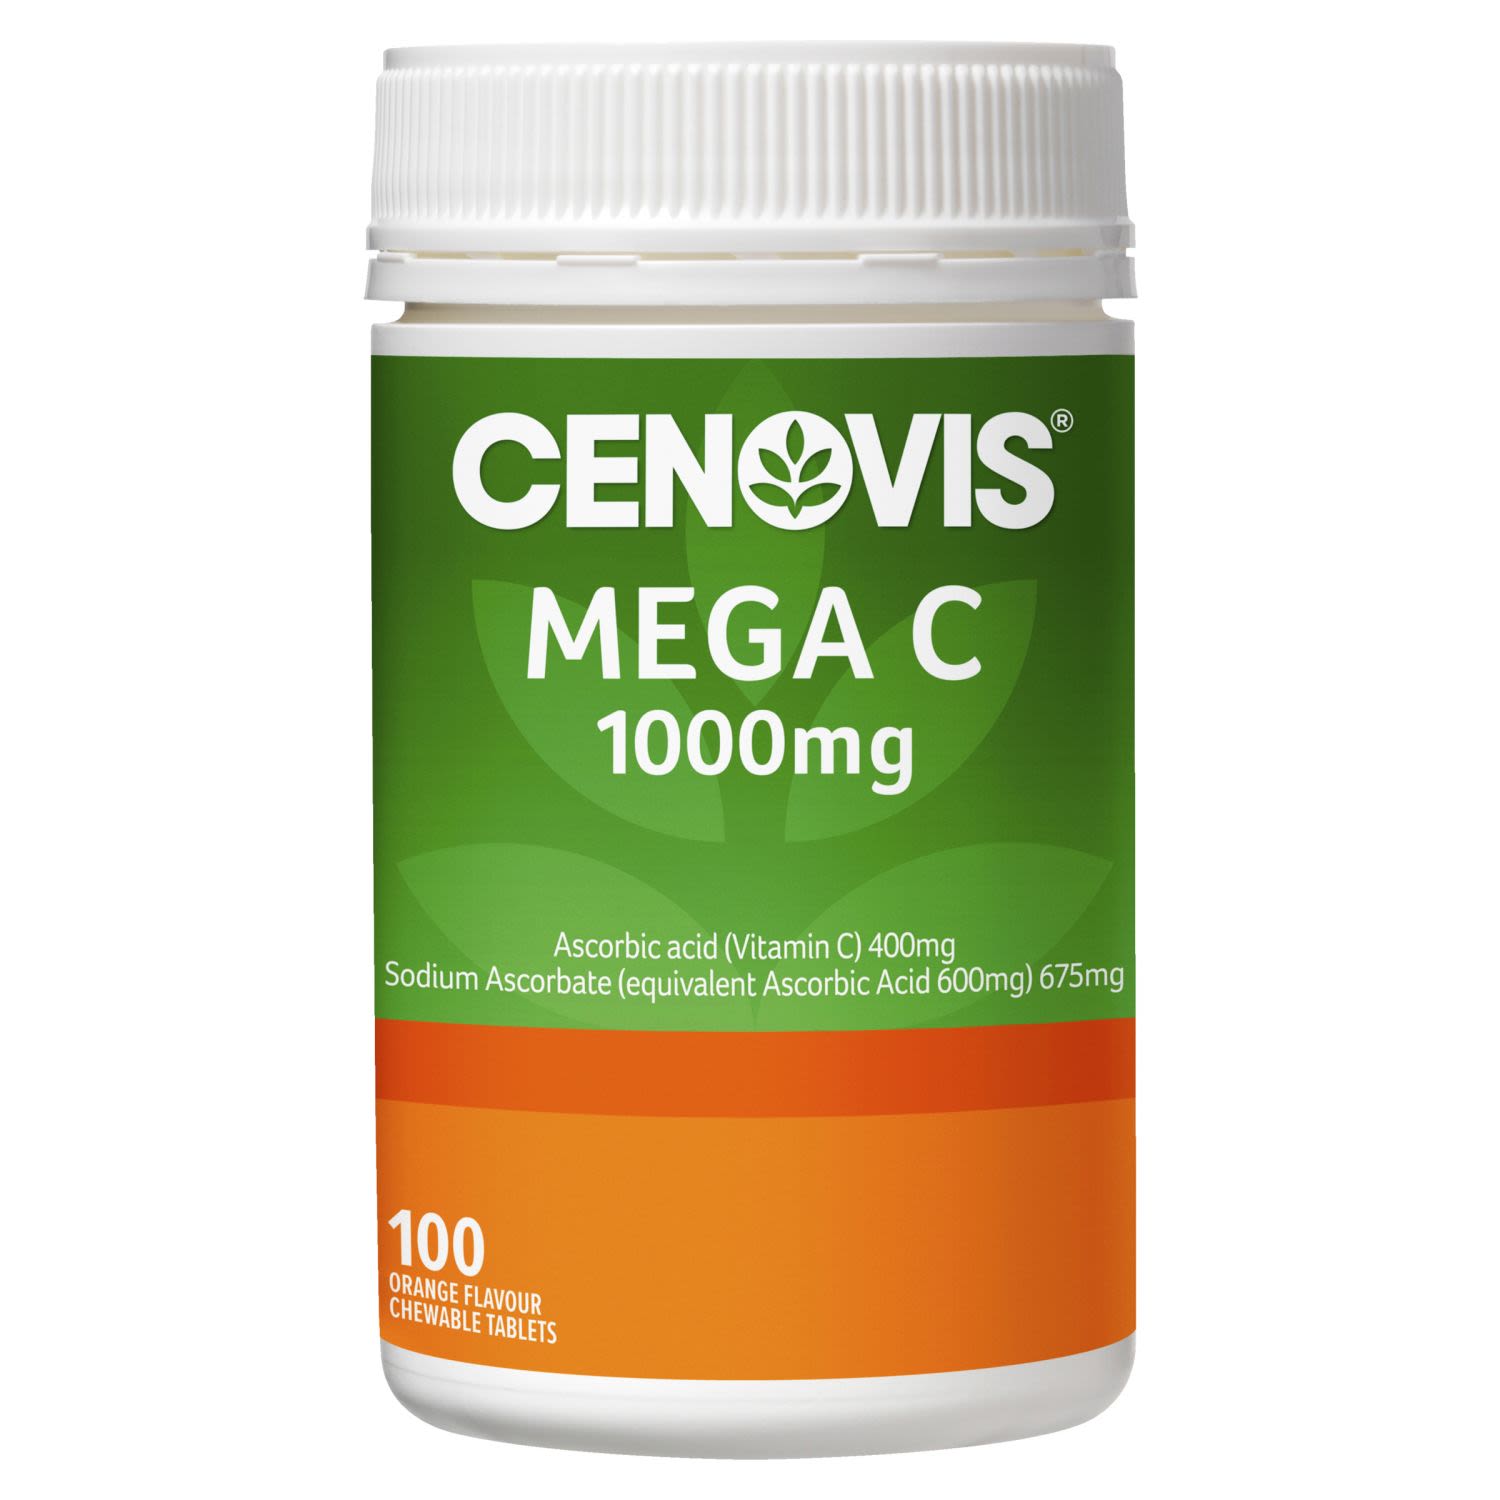 Cenovis Mega C 1000mg, 100 Each